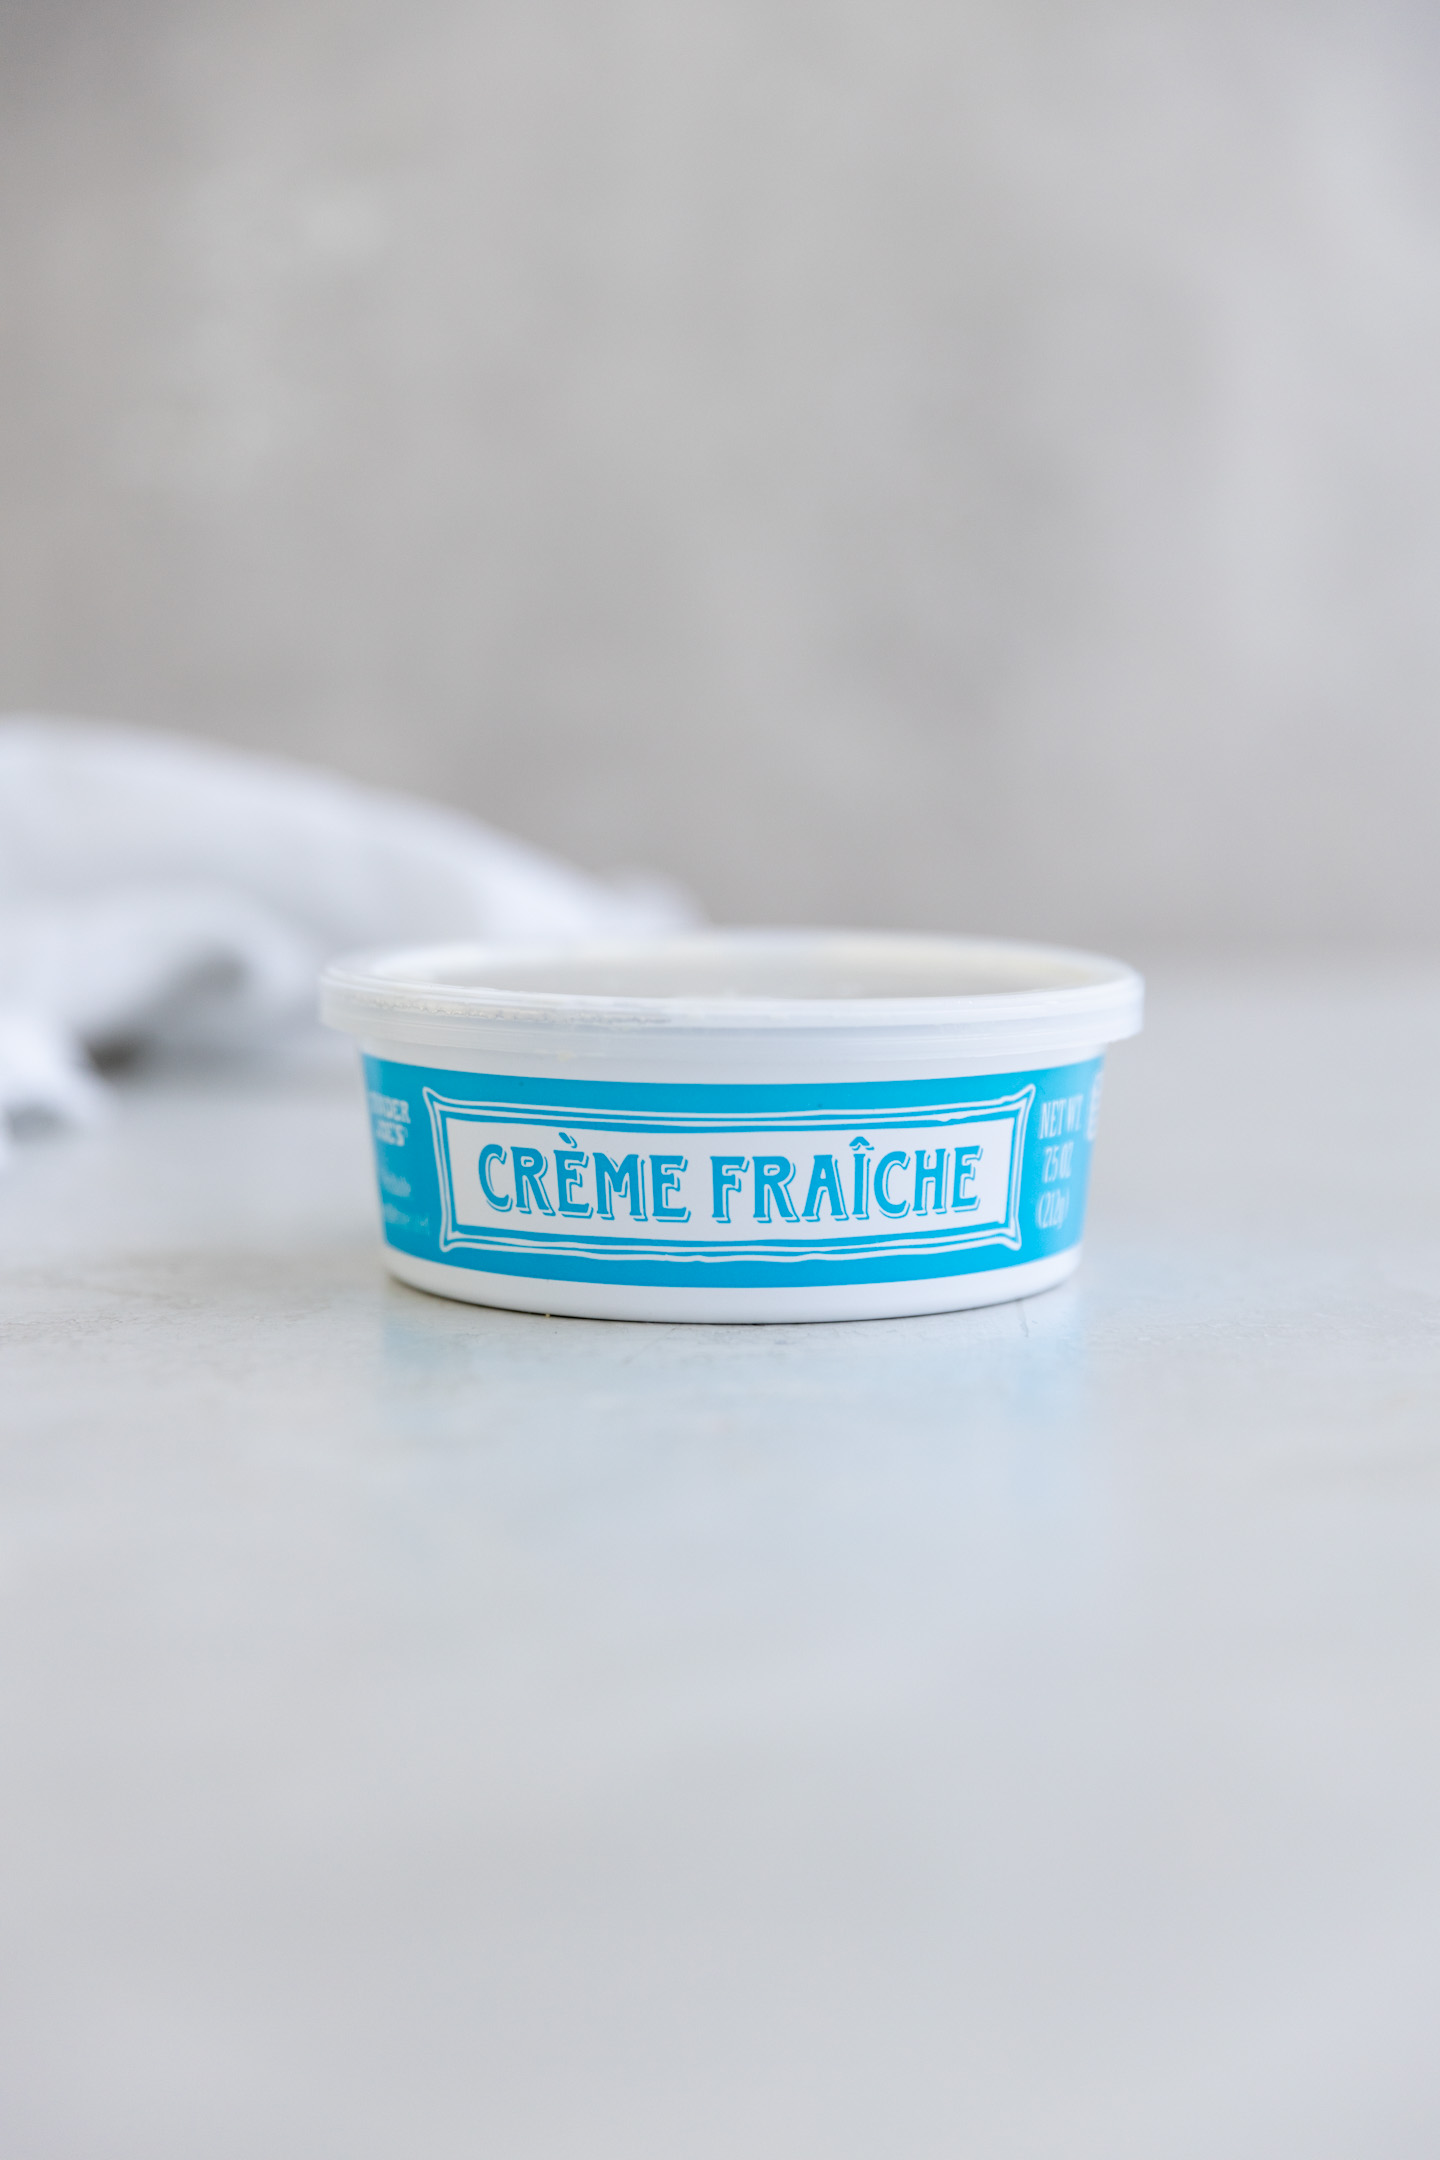 A tub of creme fraiche on a light grey surface.